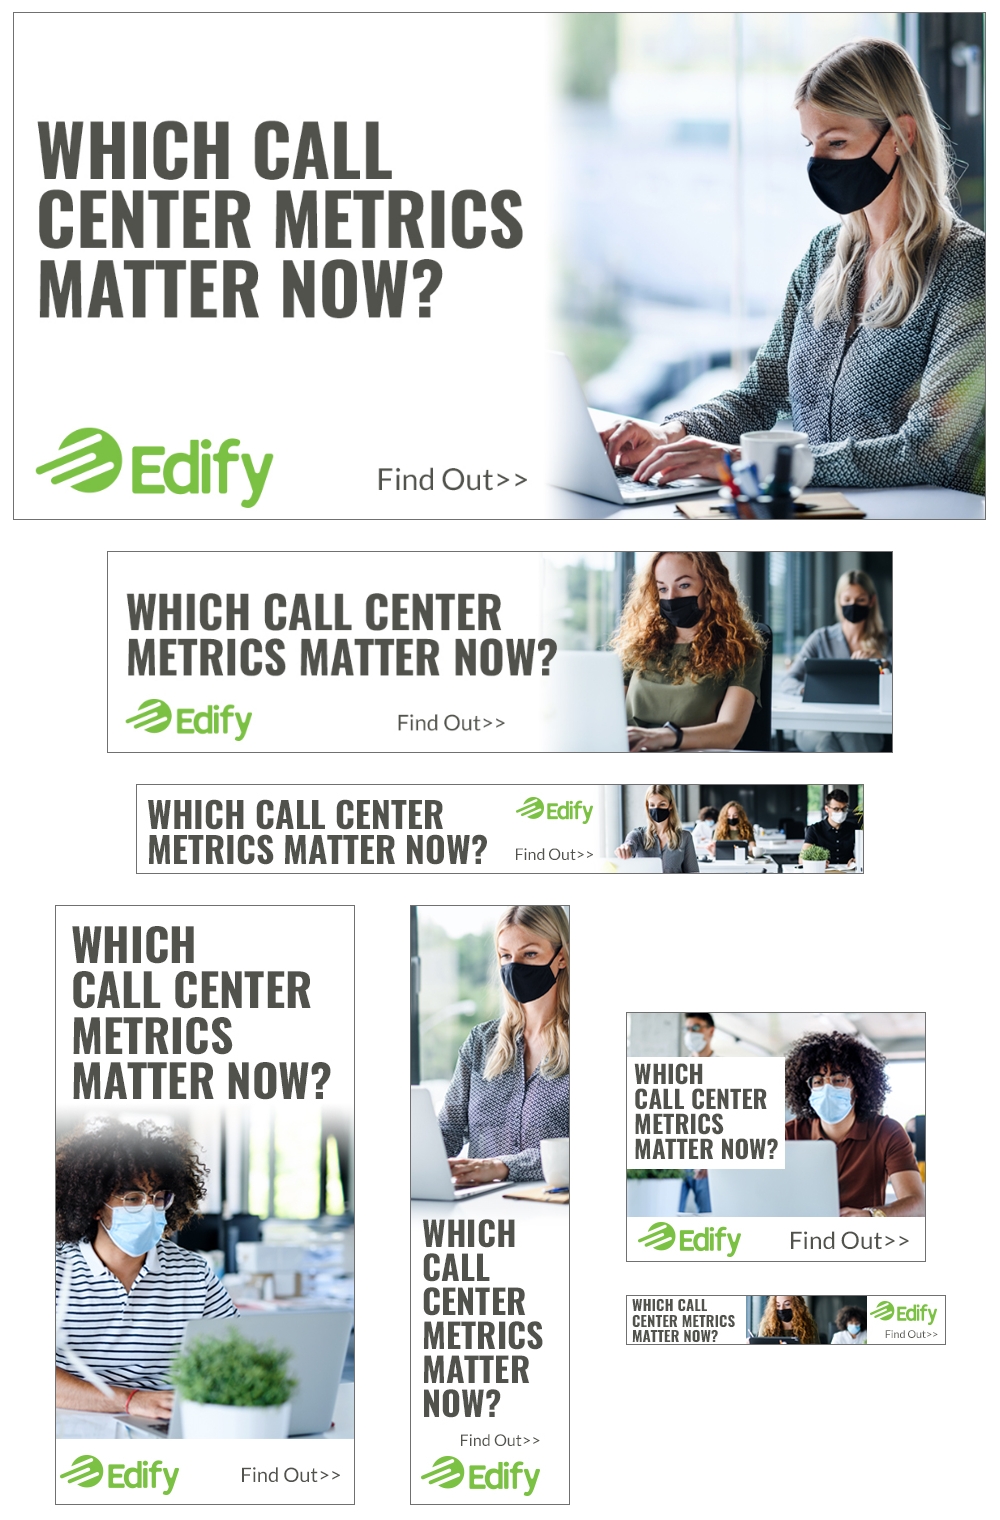 Edify digital web and mobile banner ad campaign